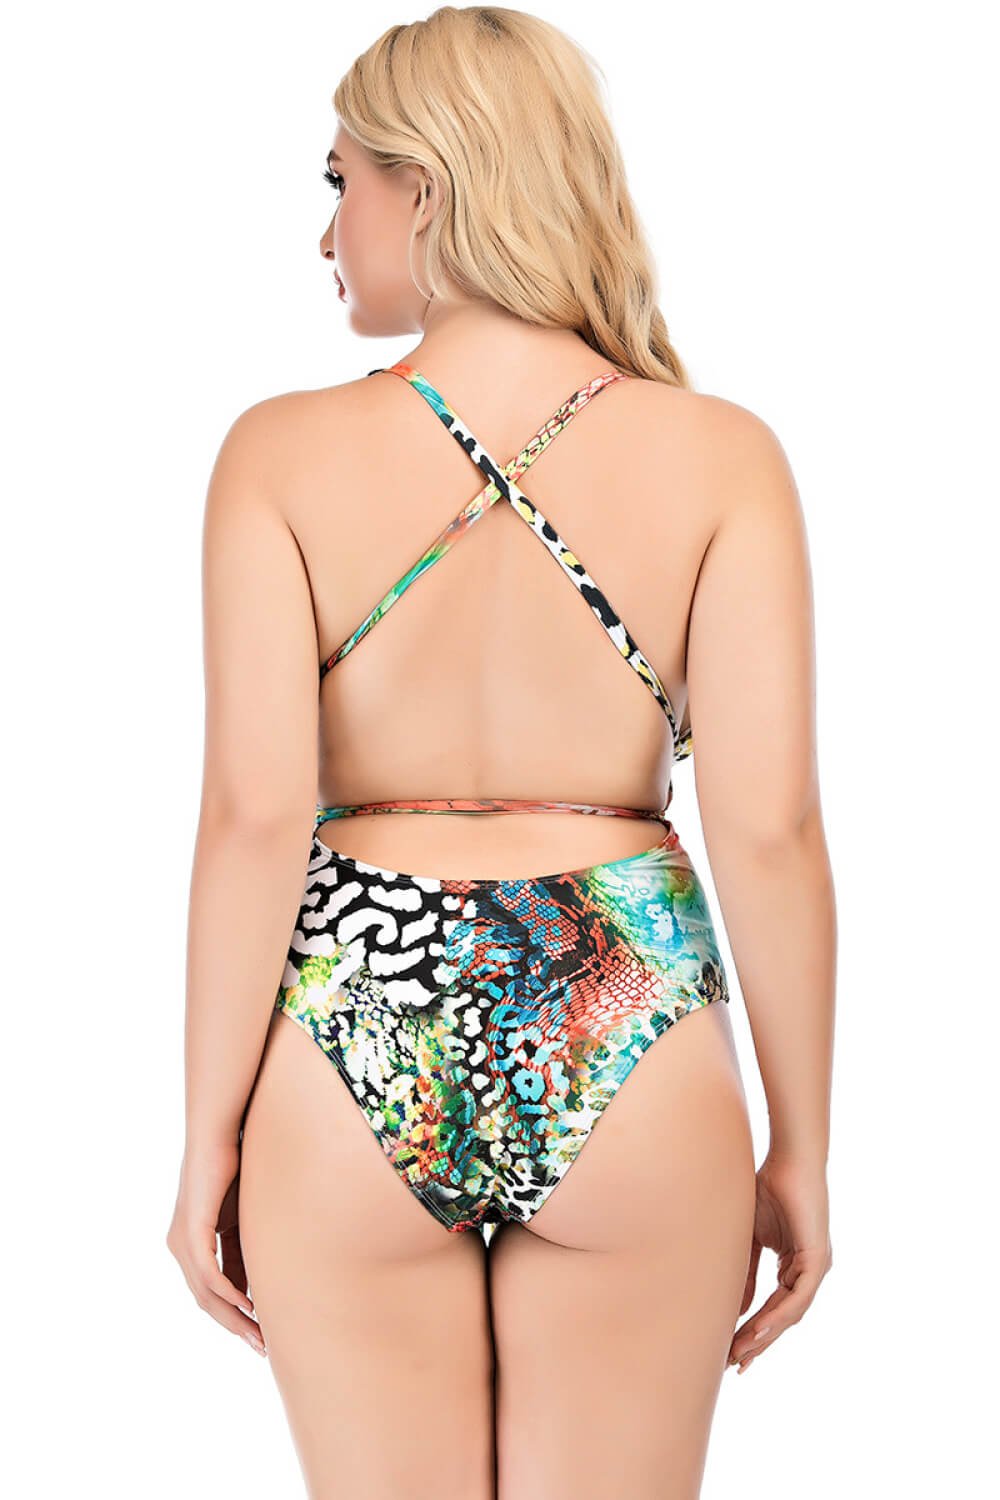 Courtney Plus Size Run Animal Print Plunge One-Piece Swimsuit Plus Size  Sunset and Swim   